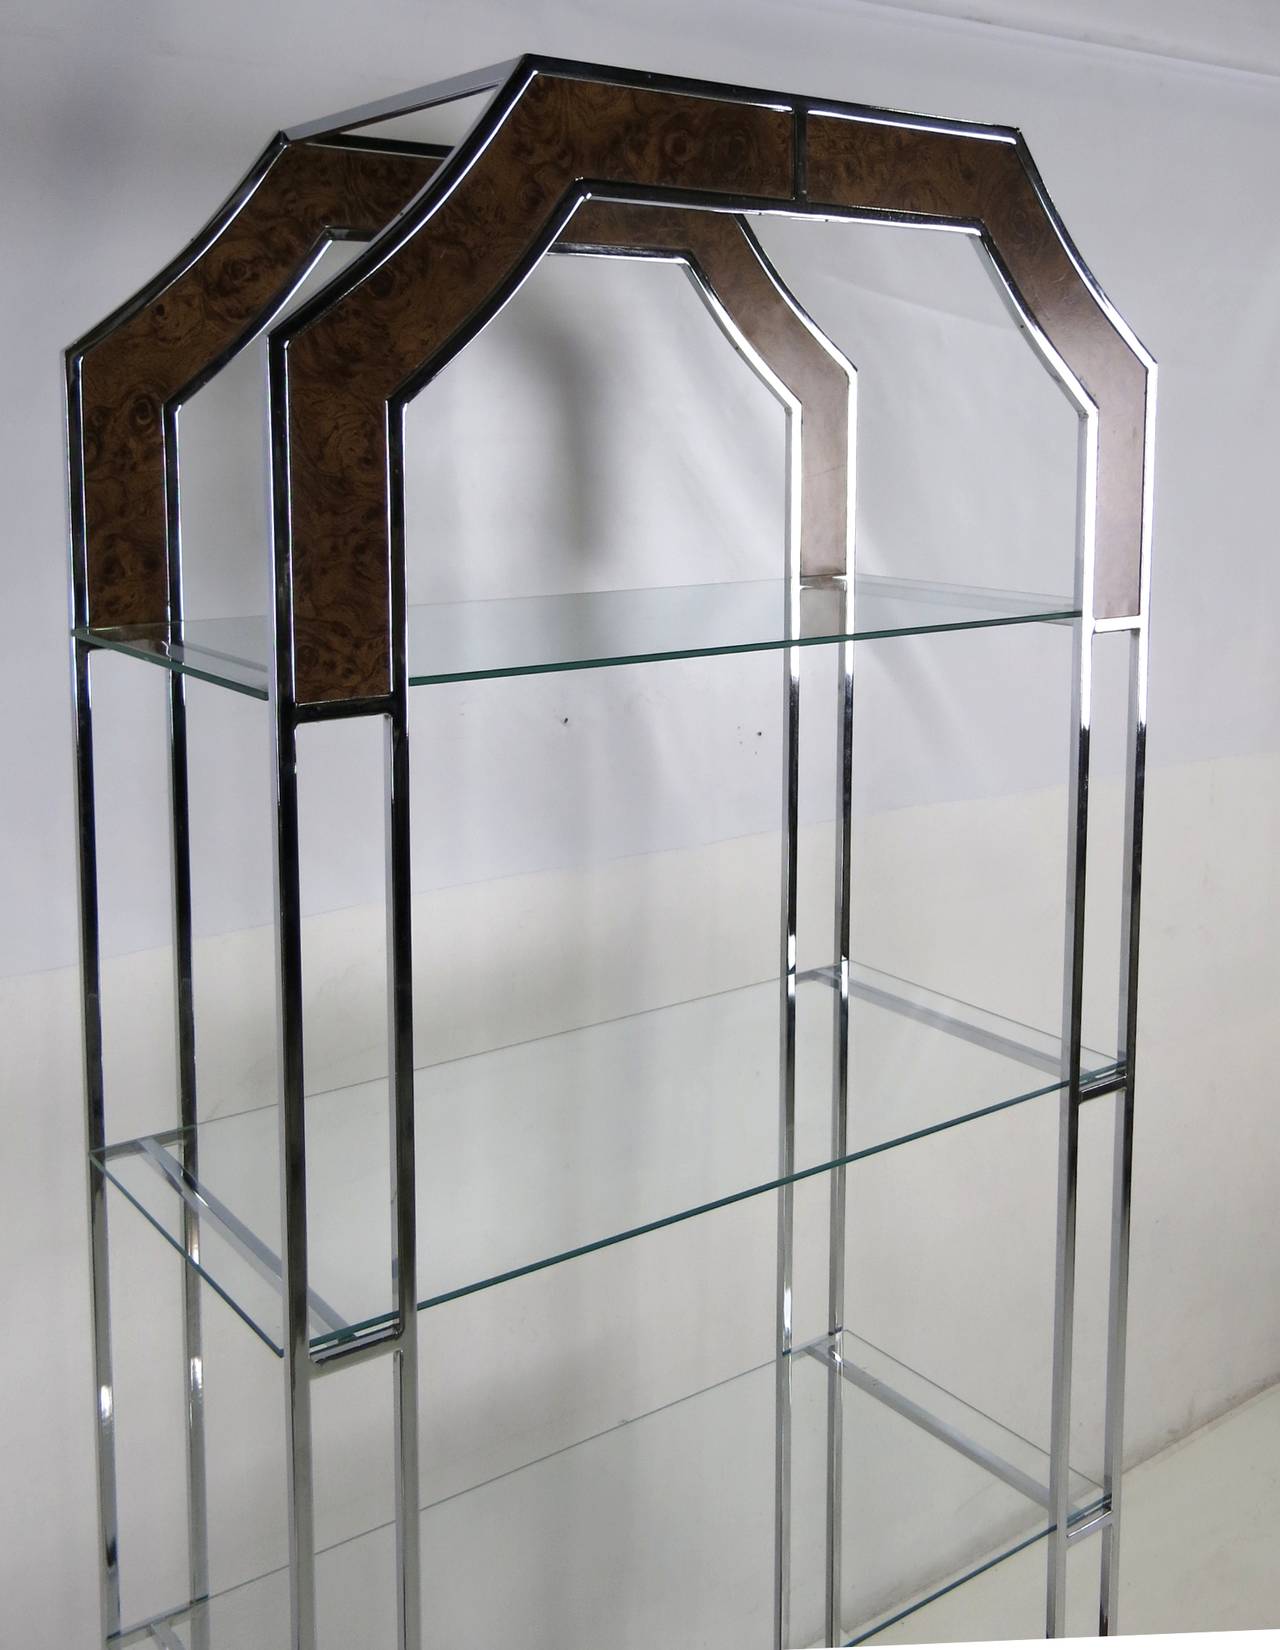 Trellis style chrome étagerés with inset burl veneer trim in the style of Milo Baughman. Three glass shelves.